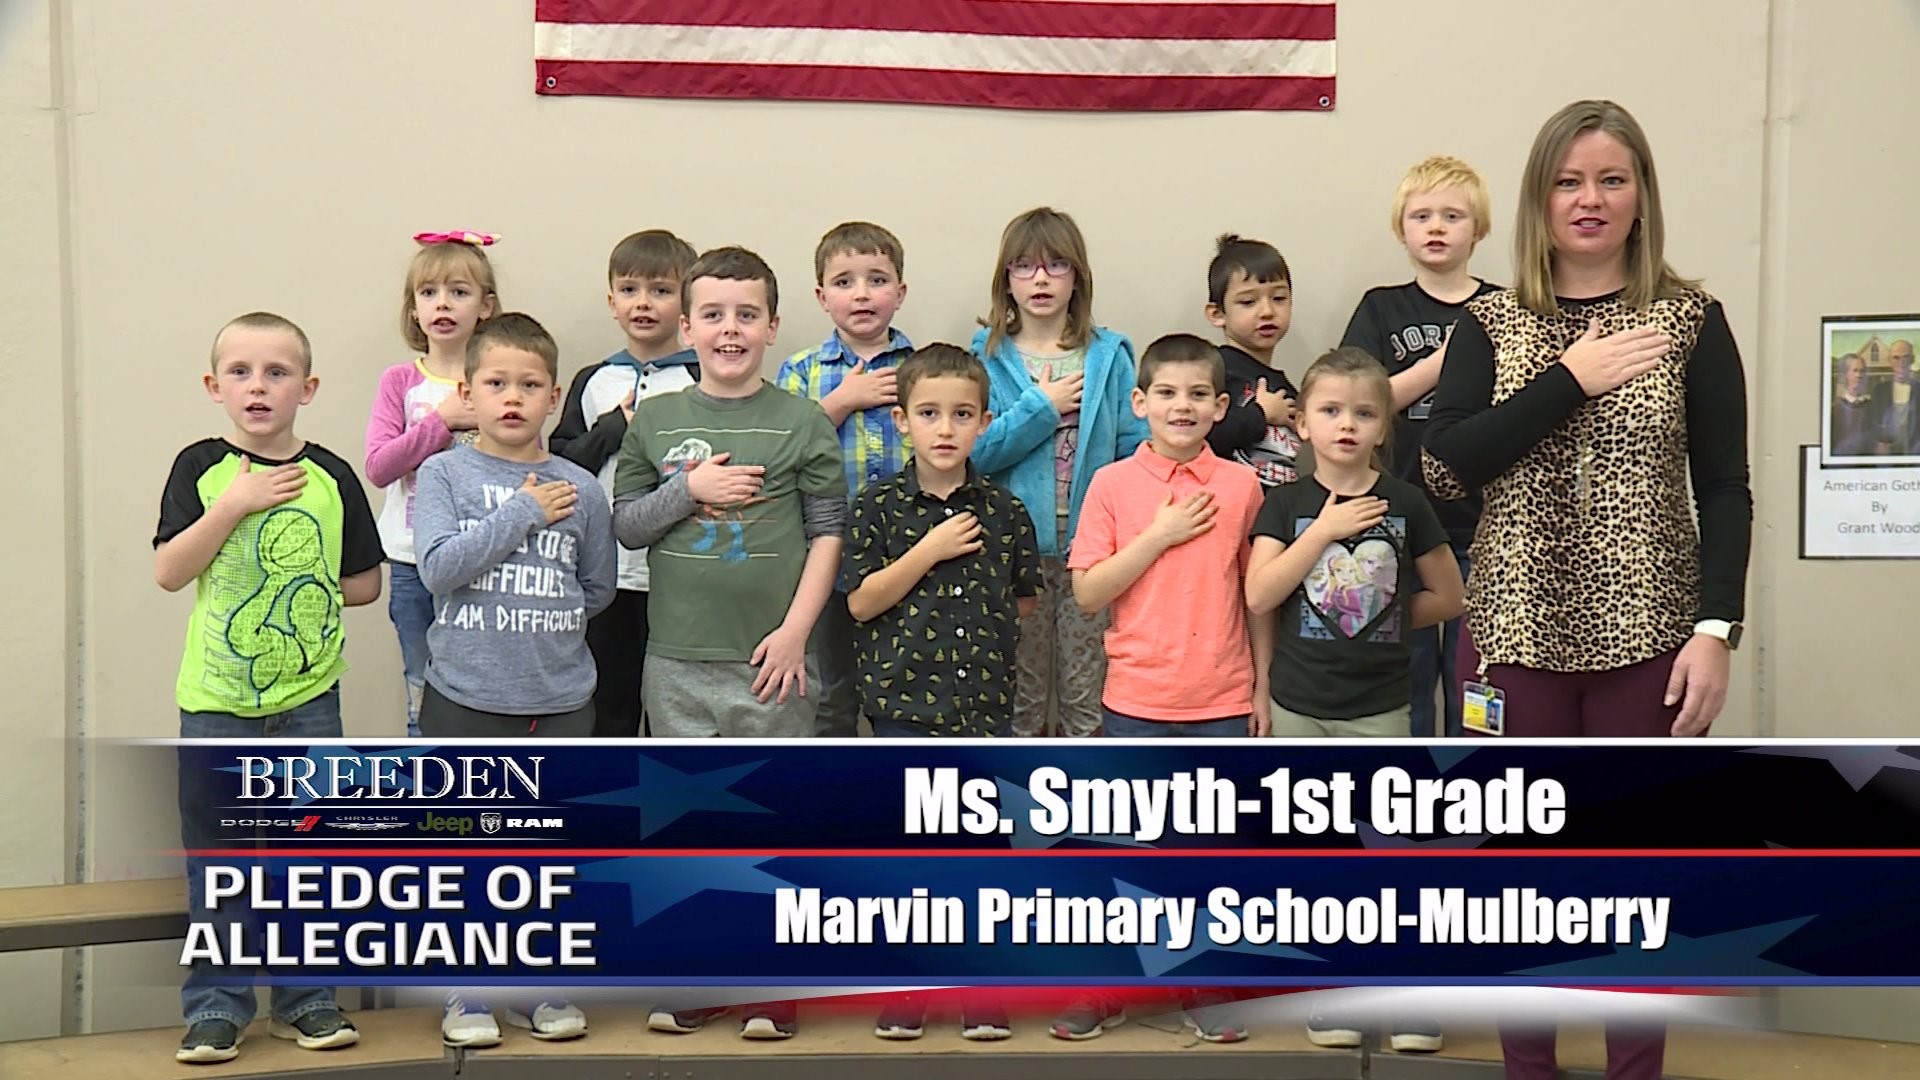 Ms. Smyth  1st Grade Marvin Primary School, Mulberry